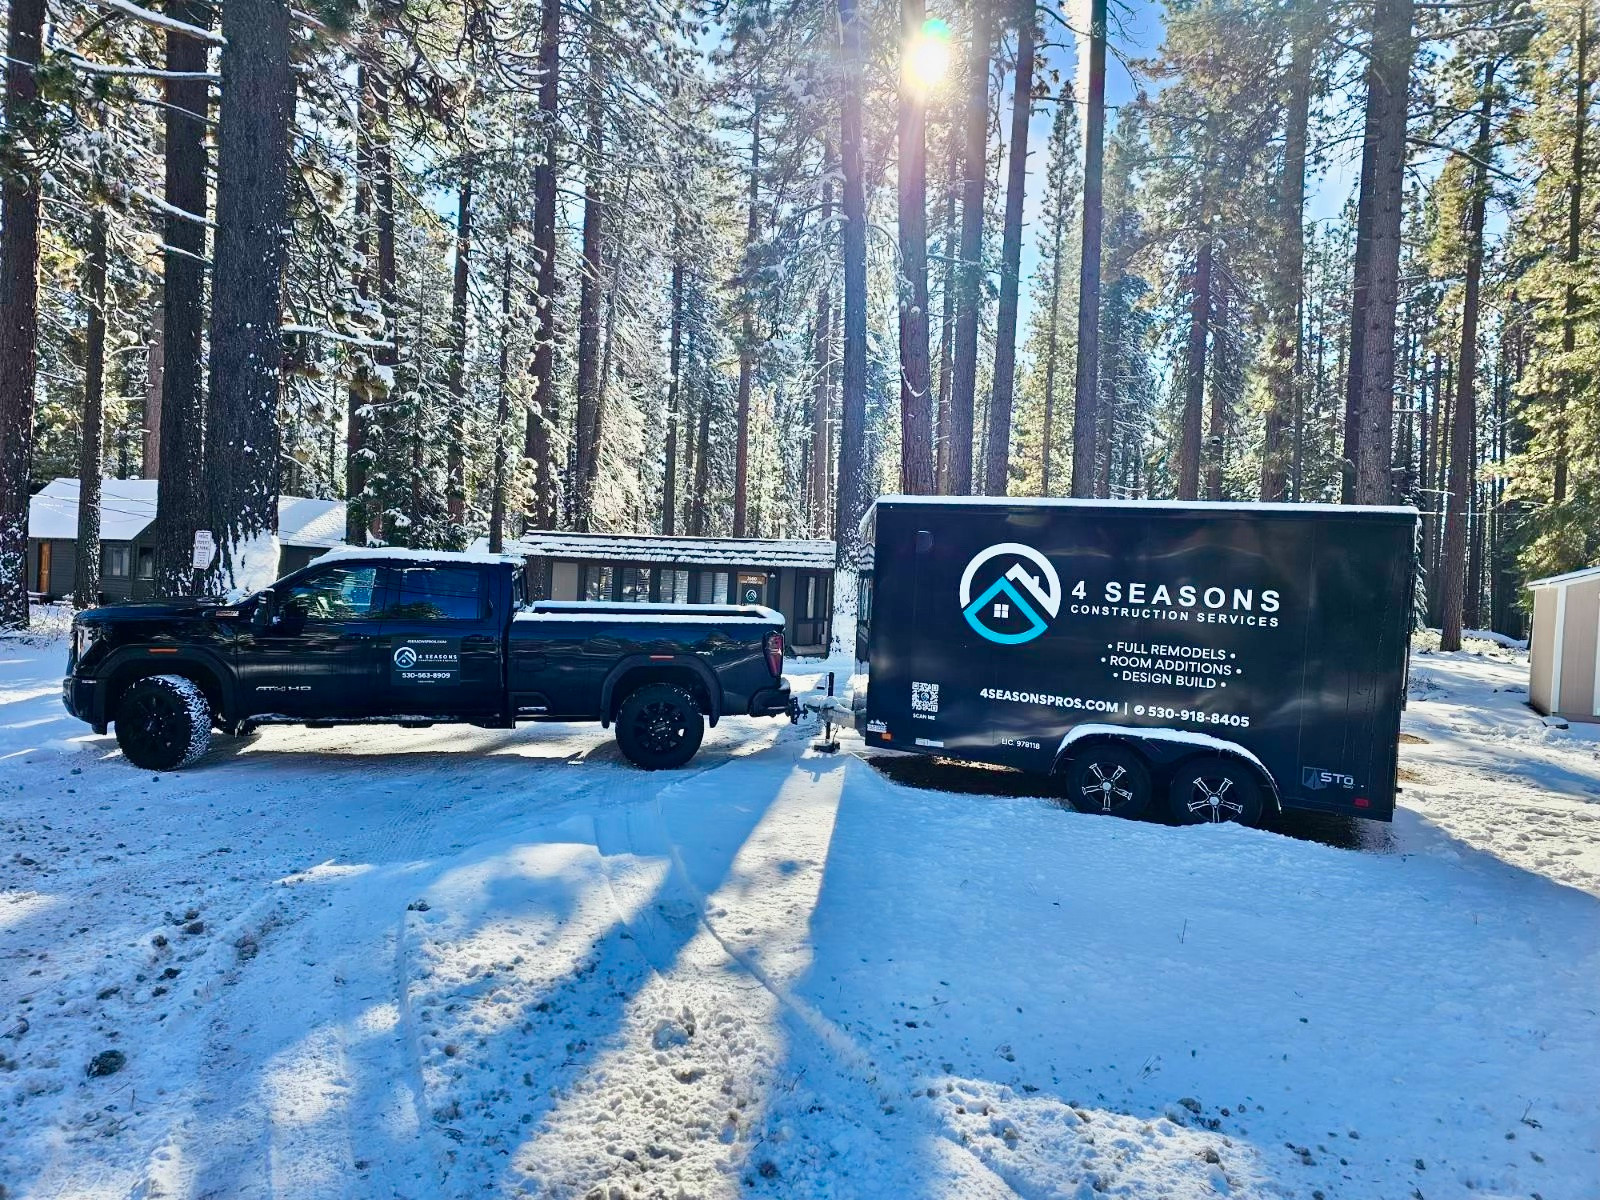 4 Seasons Construction Services Tahoe Truckee